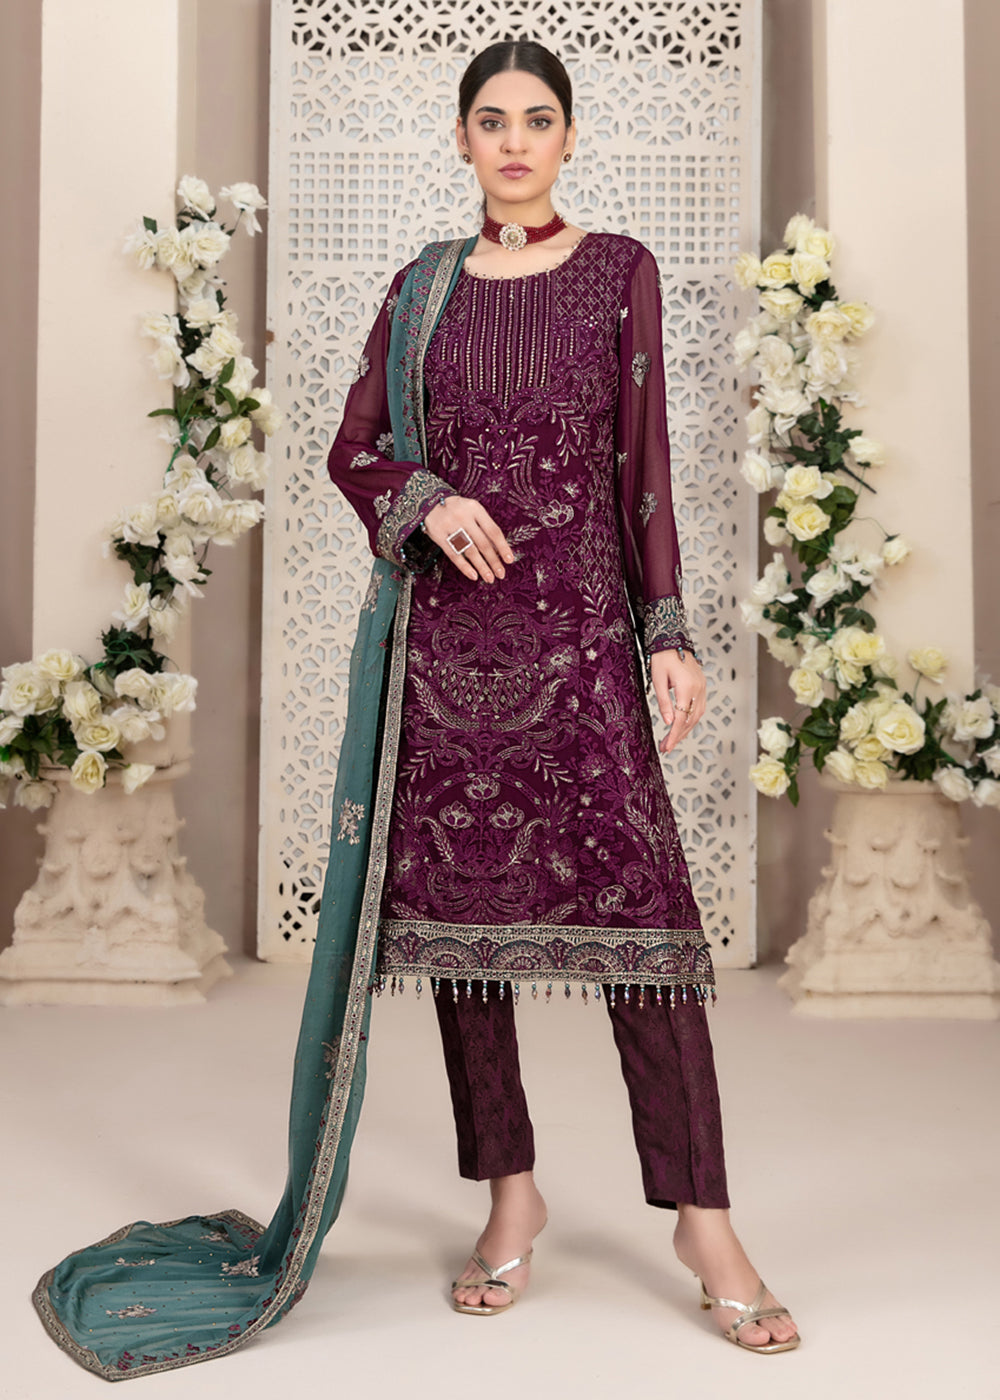 Buy Now Nayara Formal Wear 2023 by Tawakkal Fabrics - D-8687 Online in USA, UK, Canada & Worldwide at Empress Clothing.